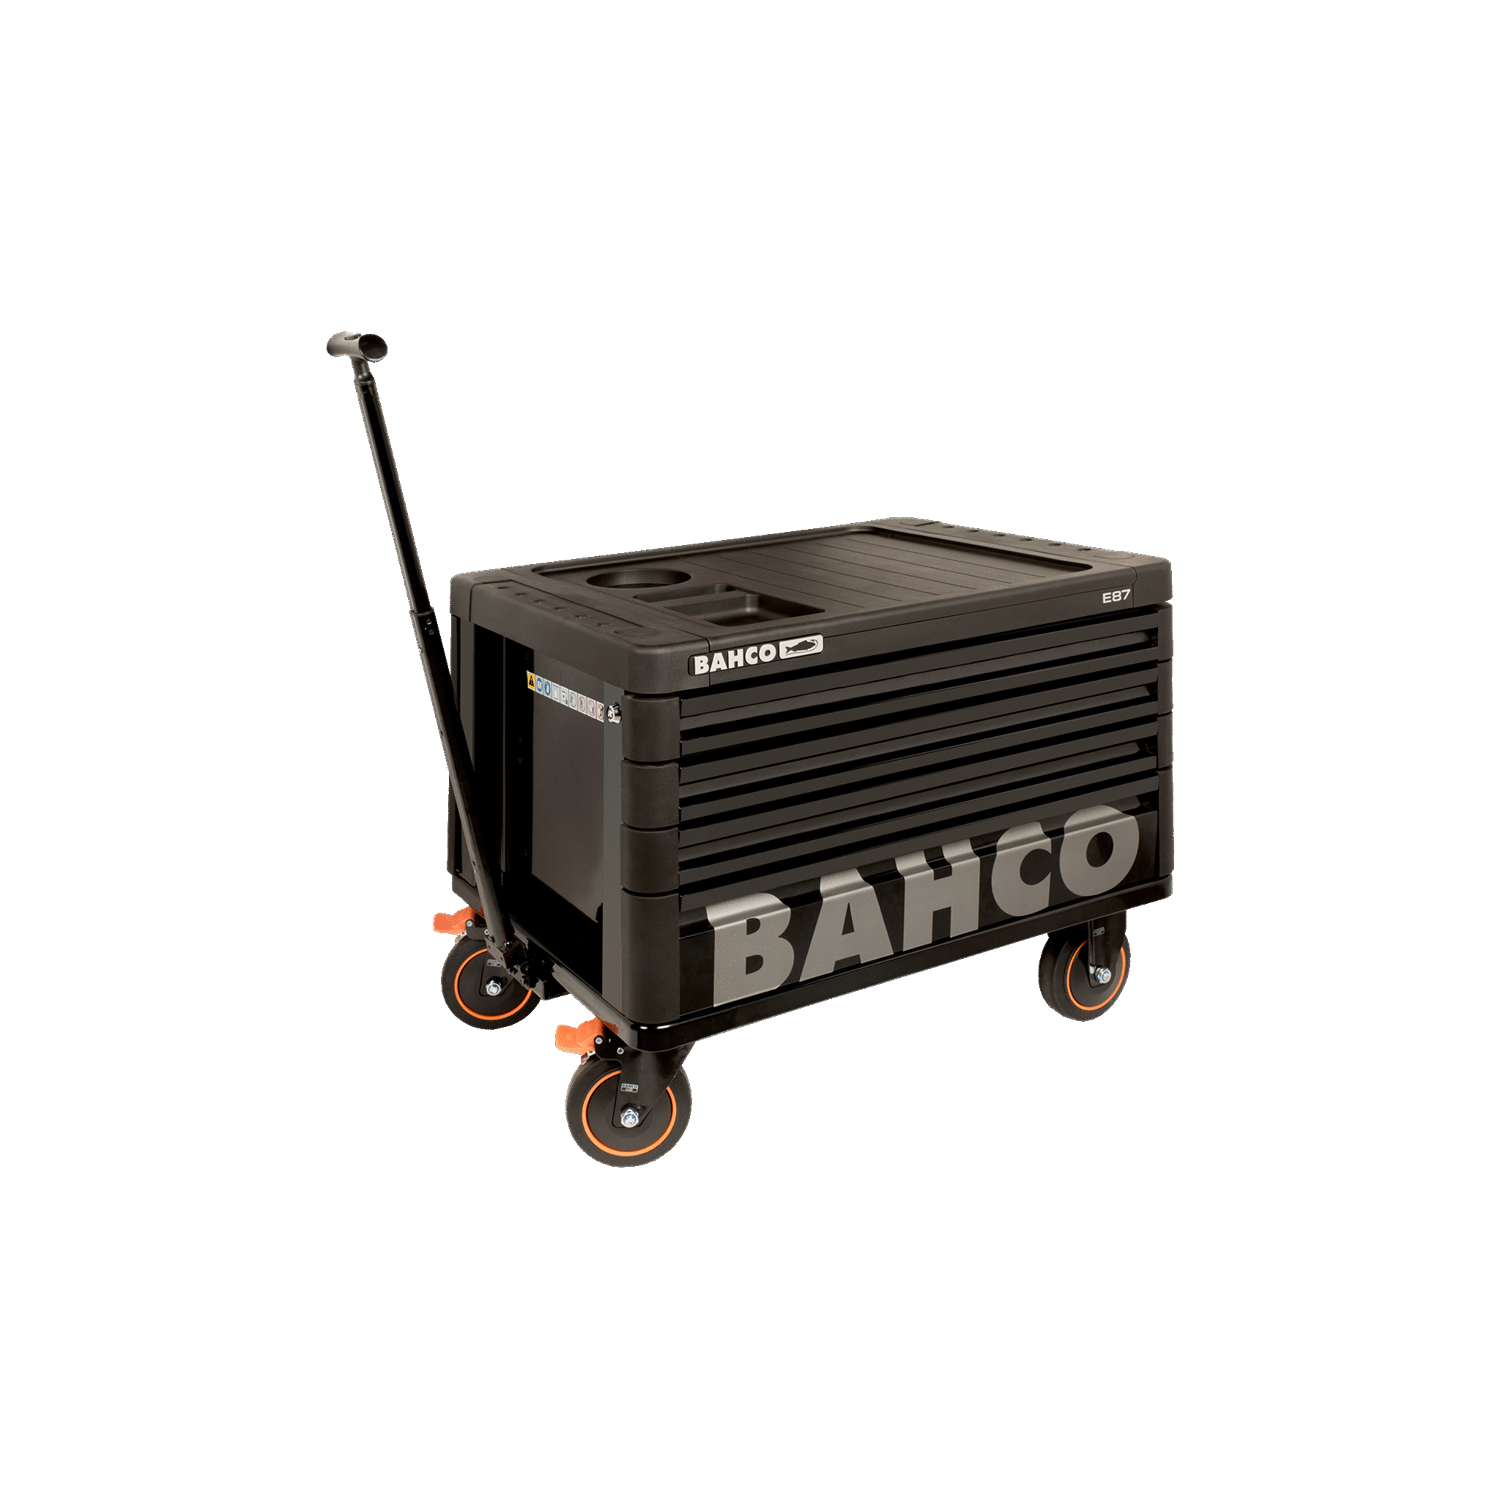 BAHCO 1487K4W Premium E87 Storage HUB Top Chests on Wheels - Premium Storage HUB from BAHCO - Shop now at Yew Aik.